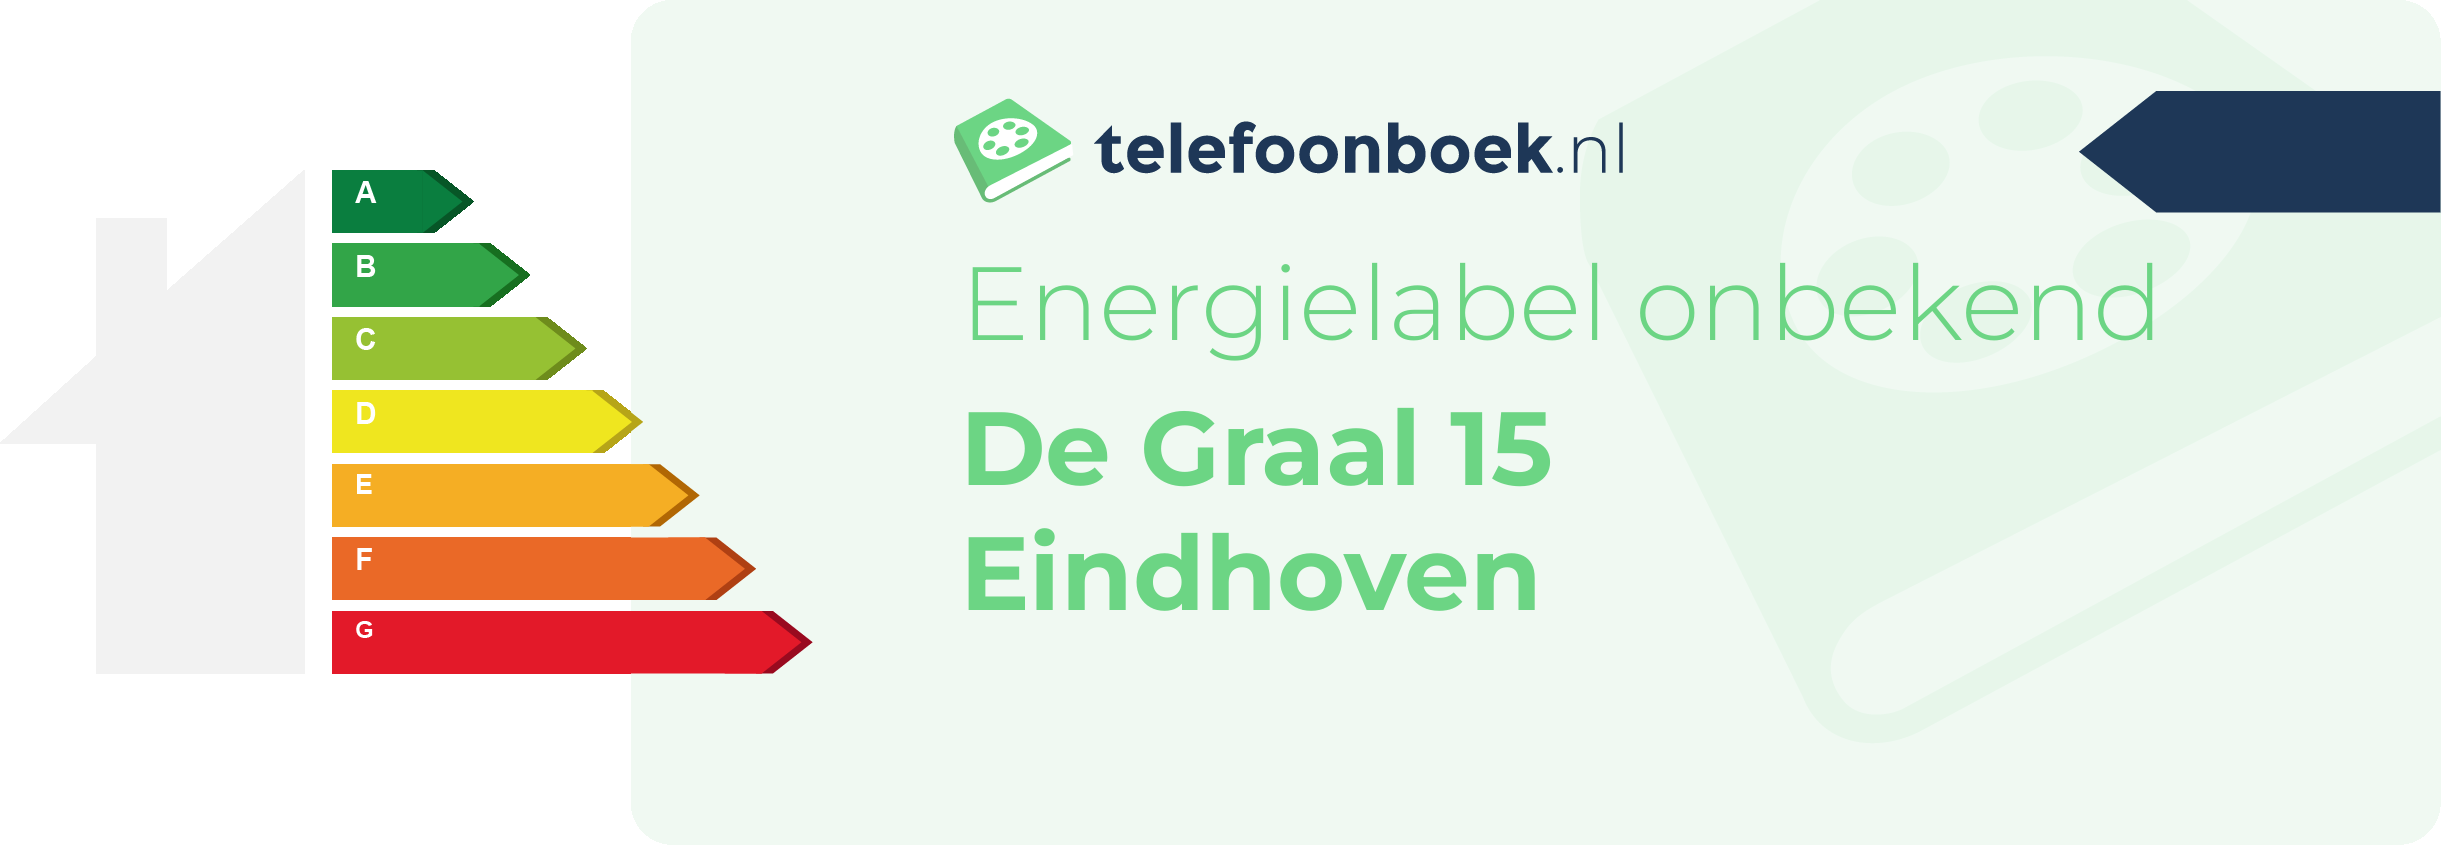 Energielabel De Graal 15 Eindhoven